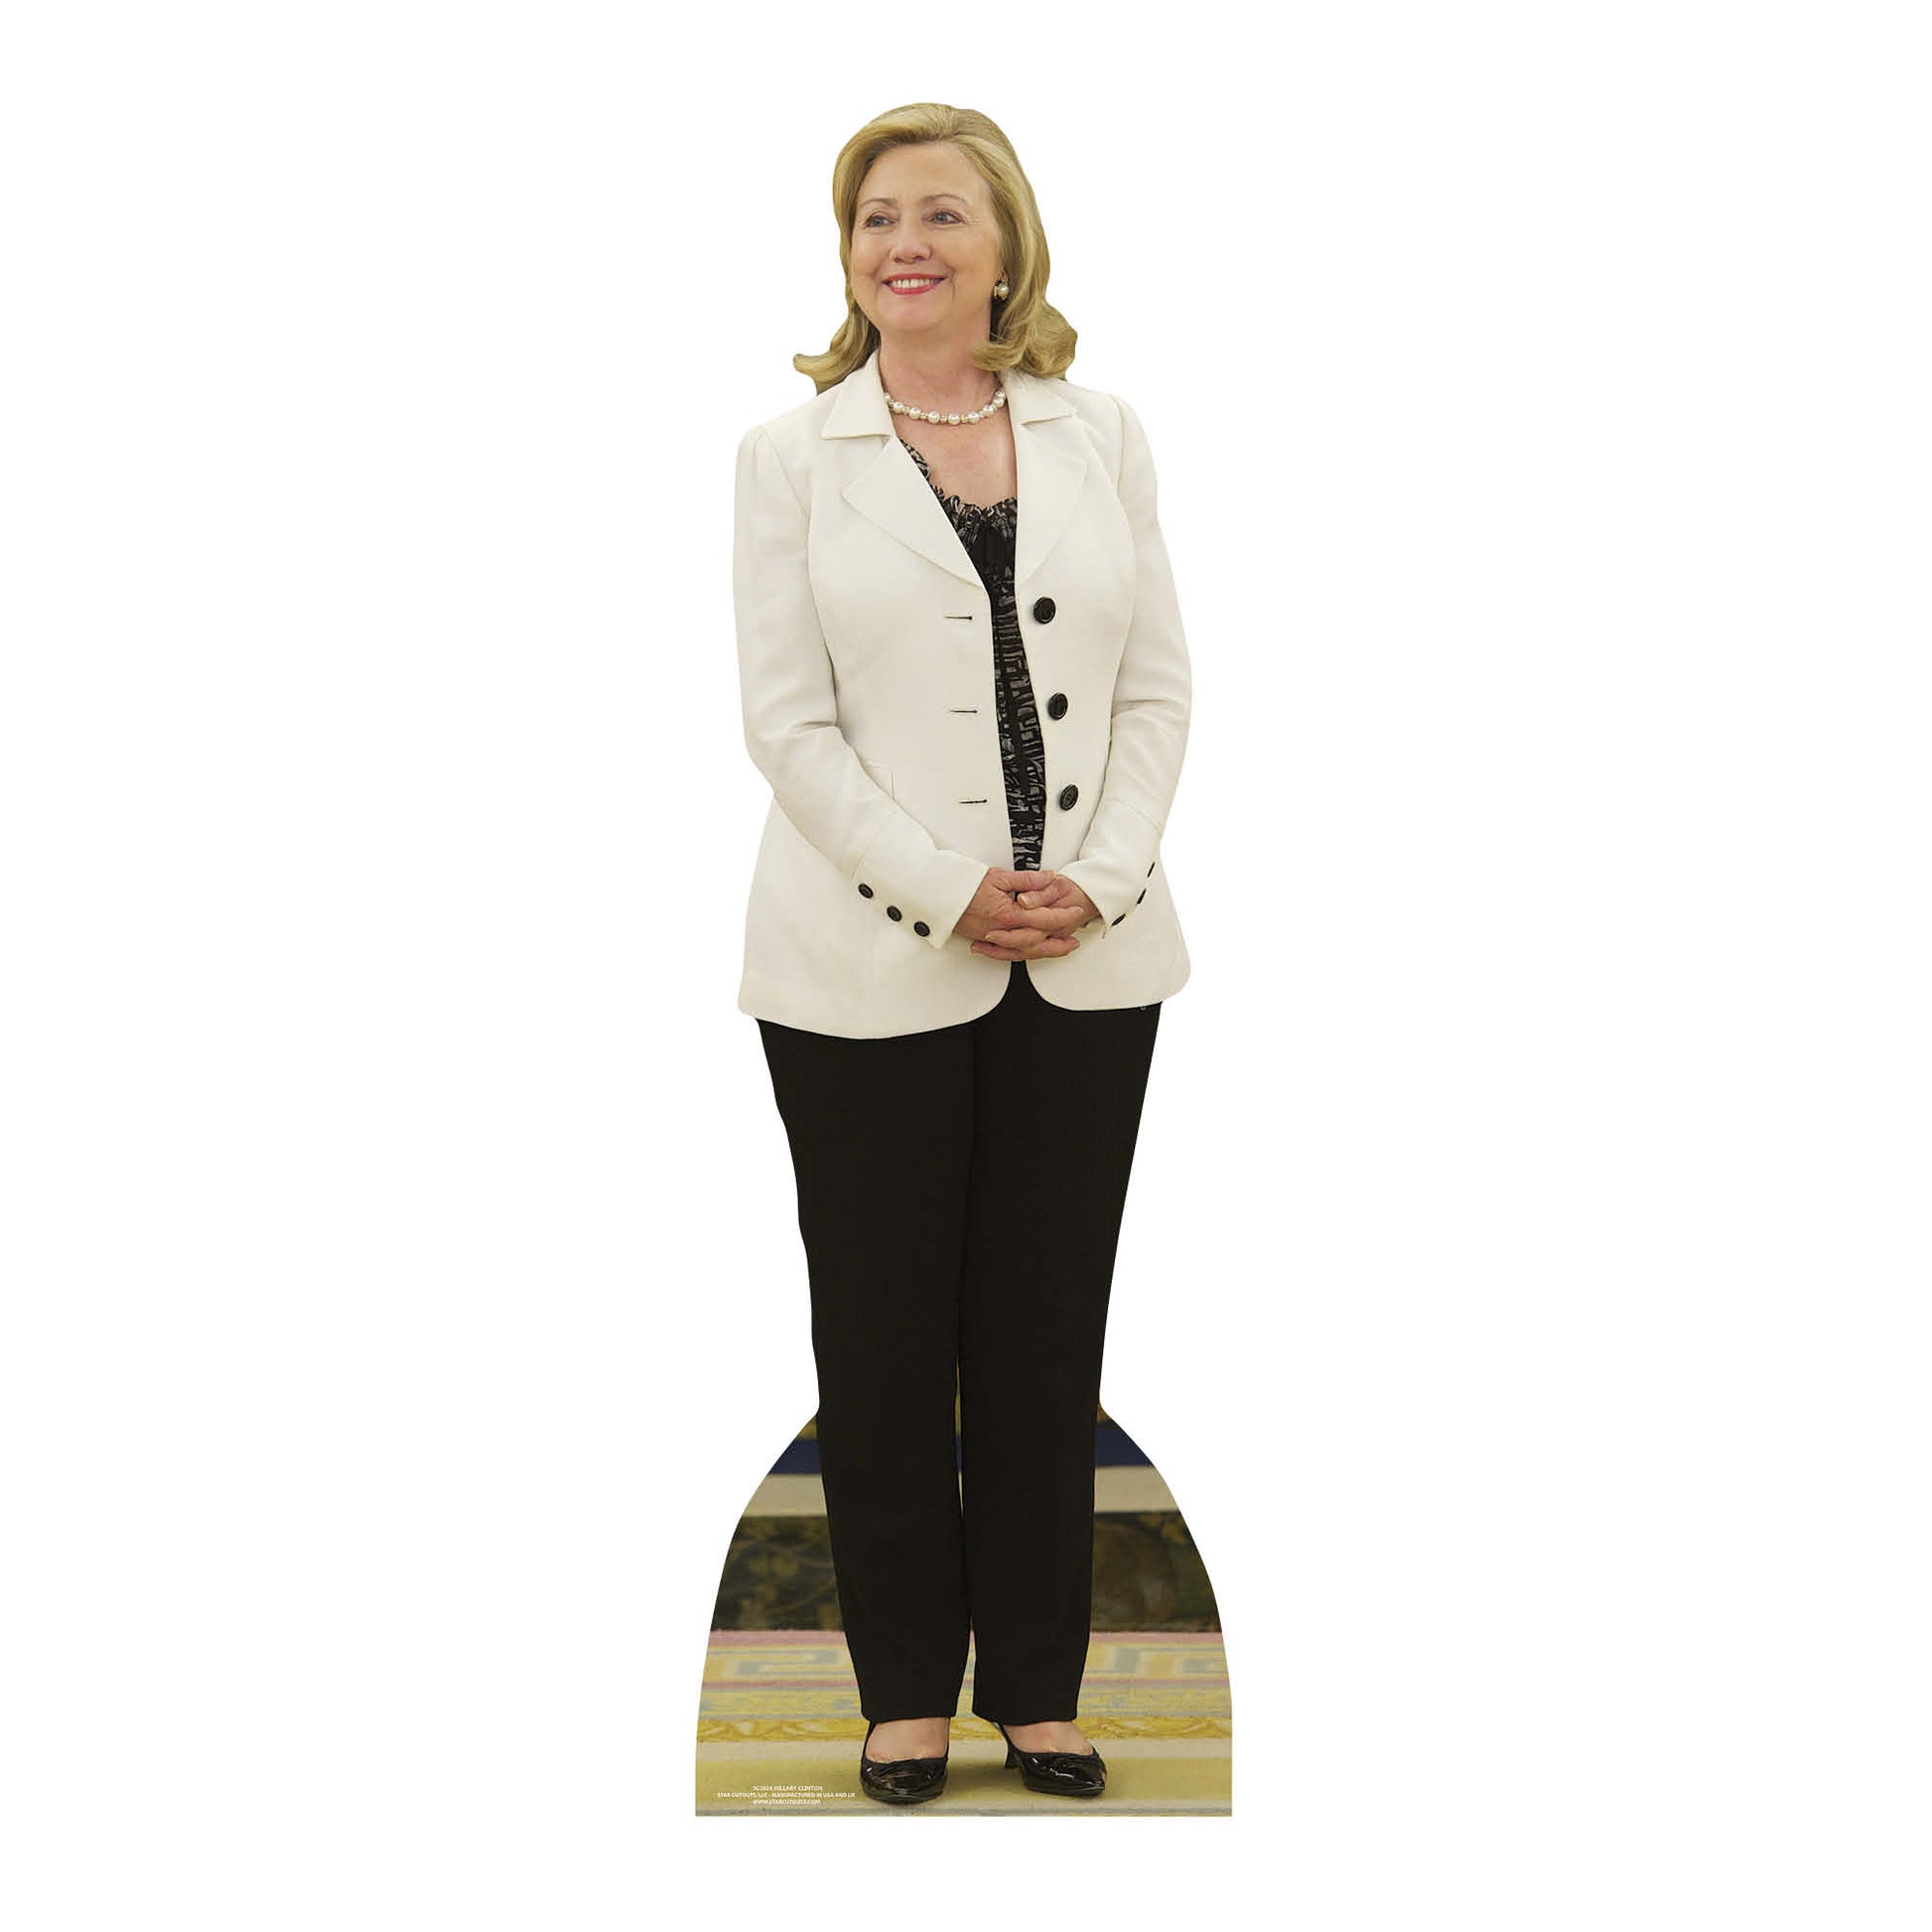 Hilary Clinton White Jacket Cardboard Cutout